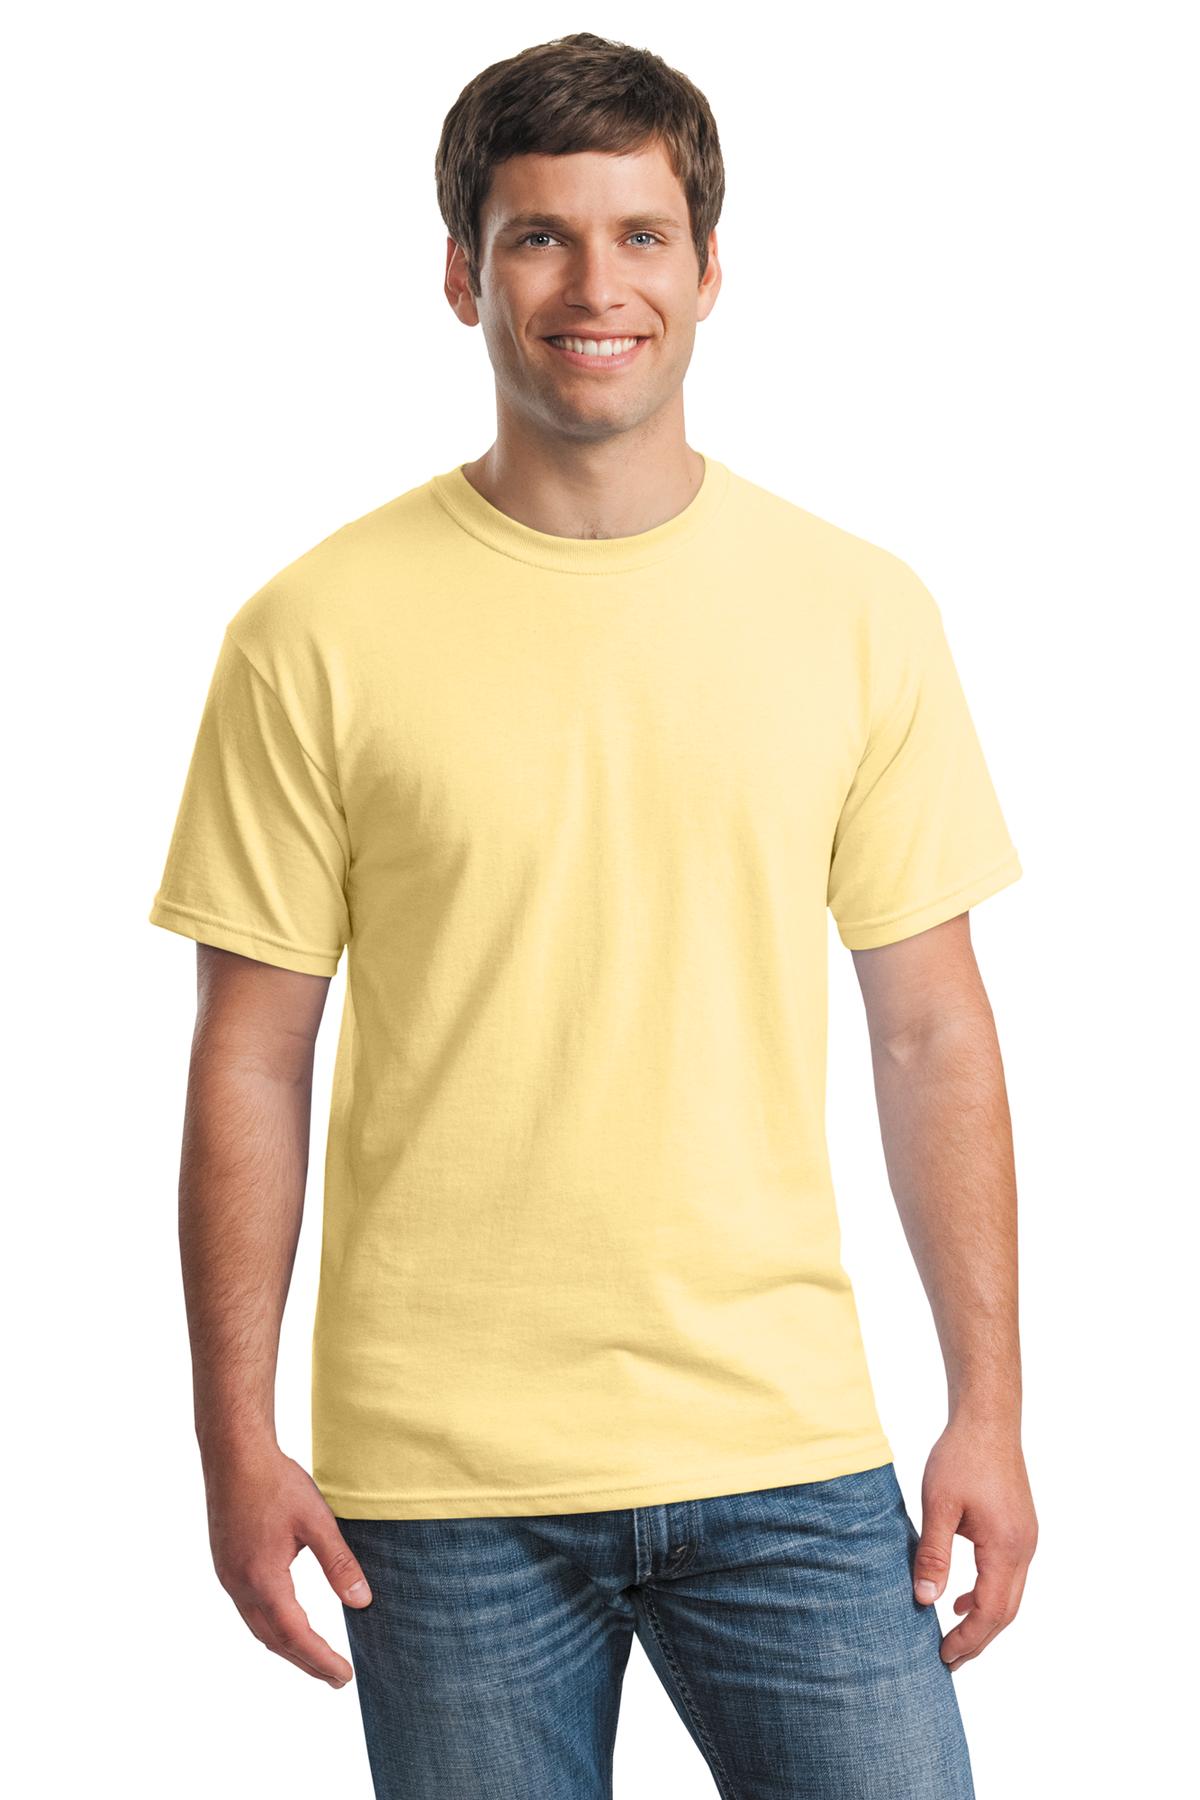 Gildan - Heavy Cotton T-Shirt - 5000 - Safety Pink - Size: XL